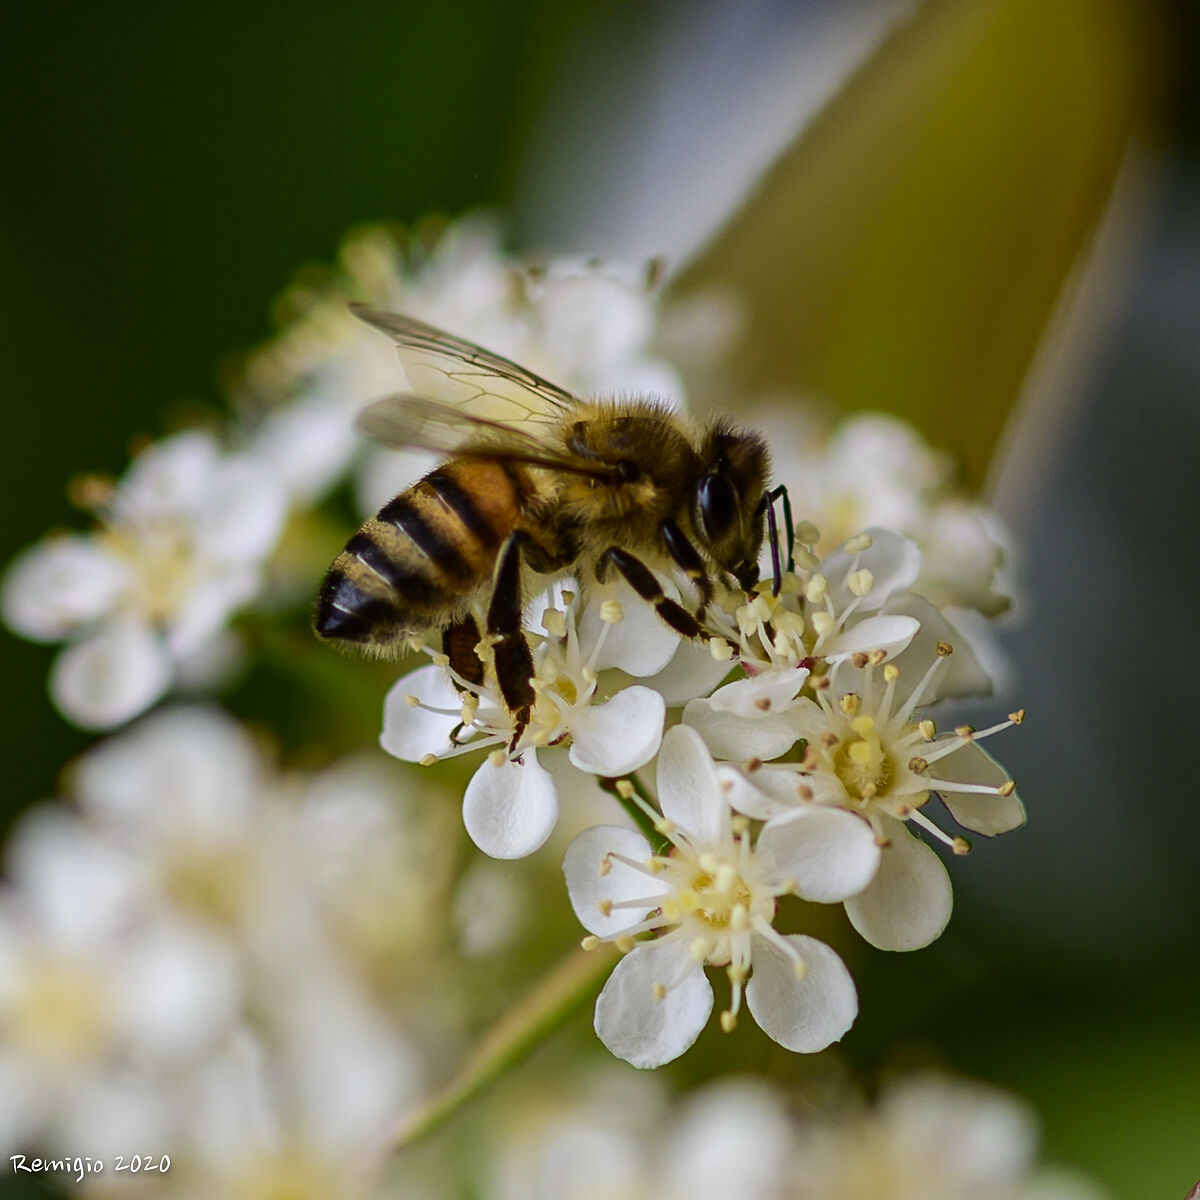 Photinia and the Bee...